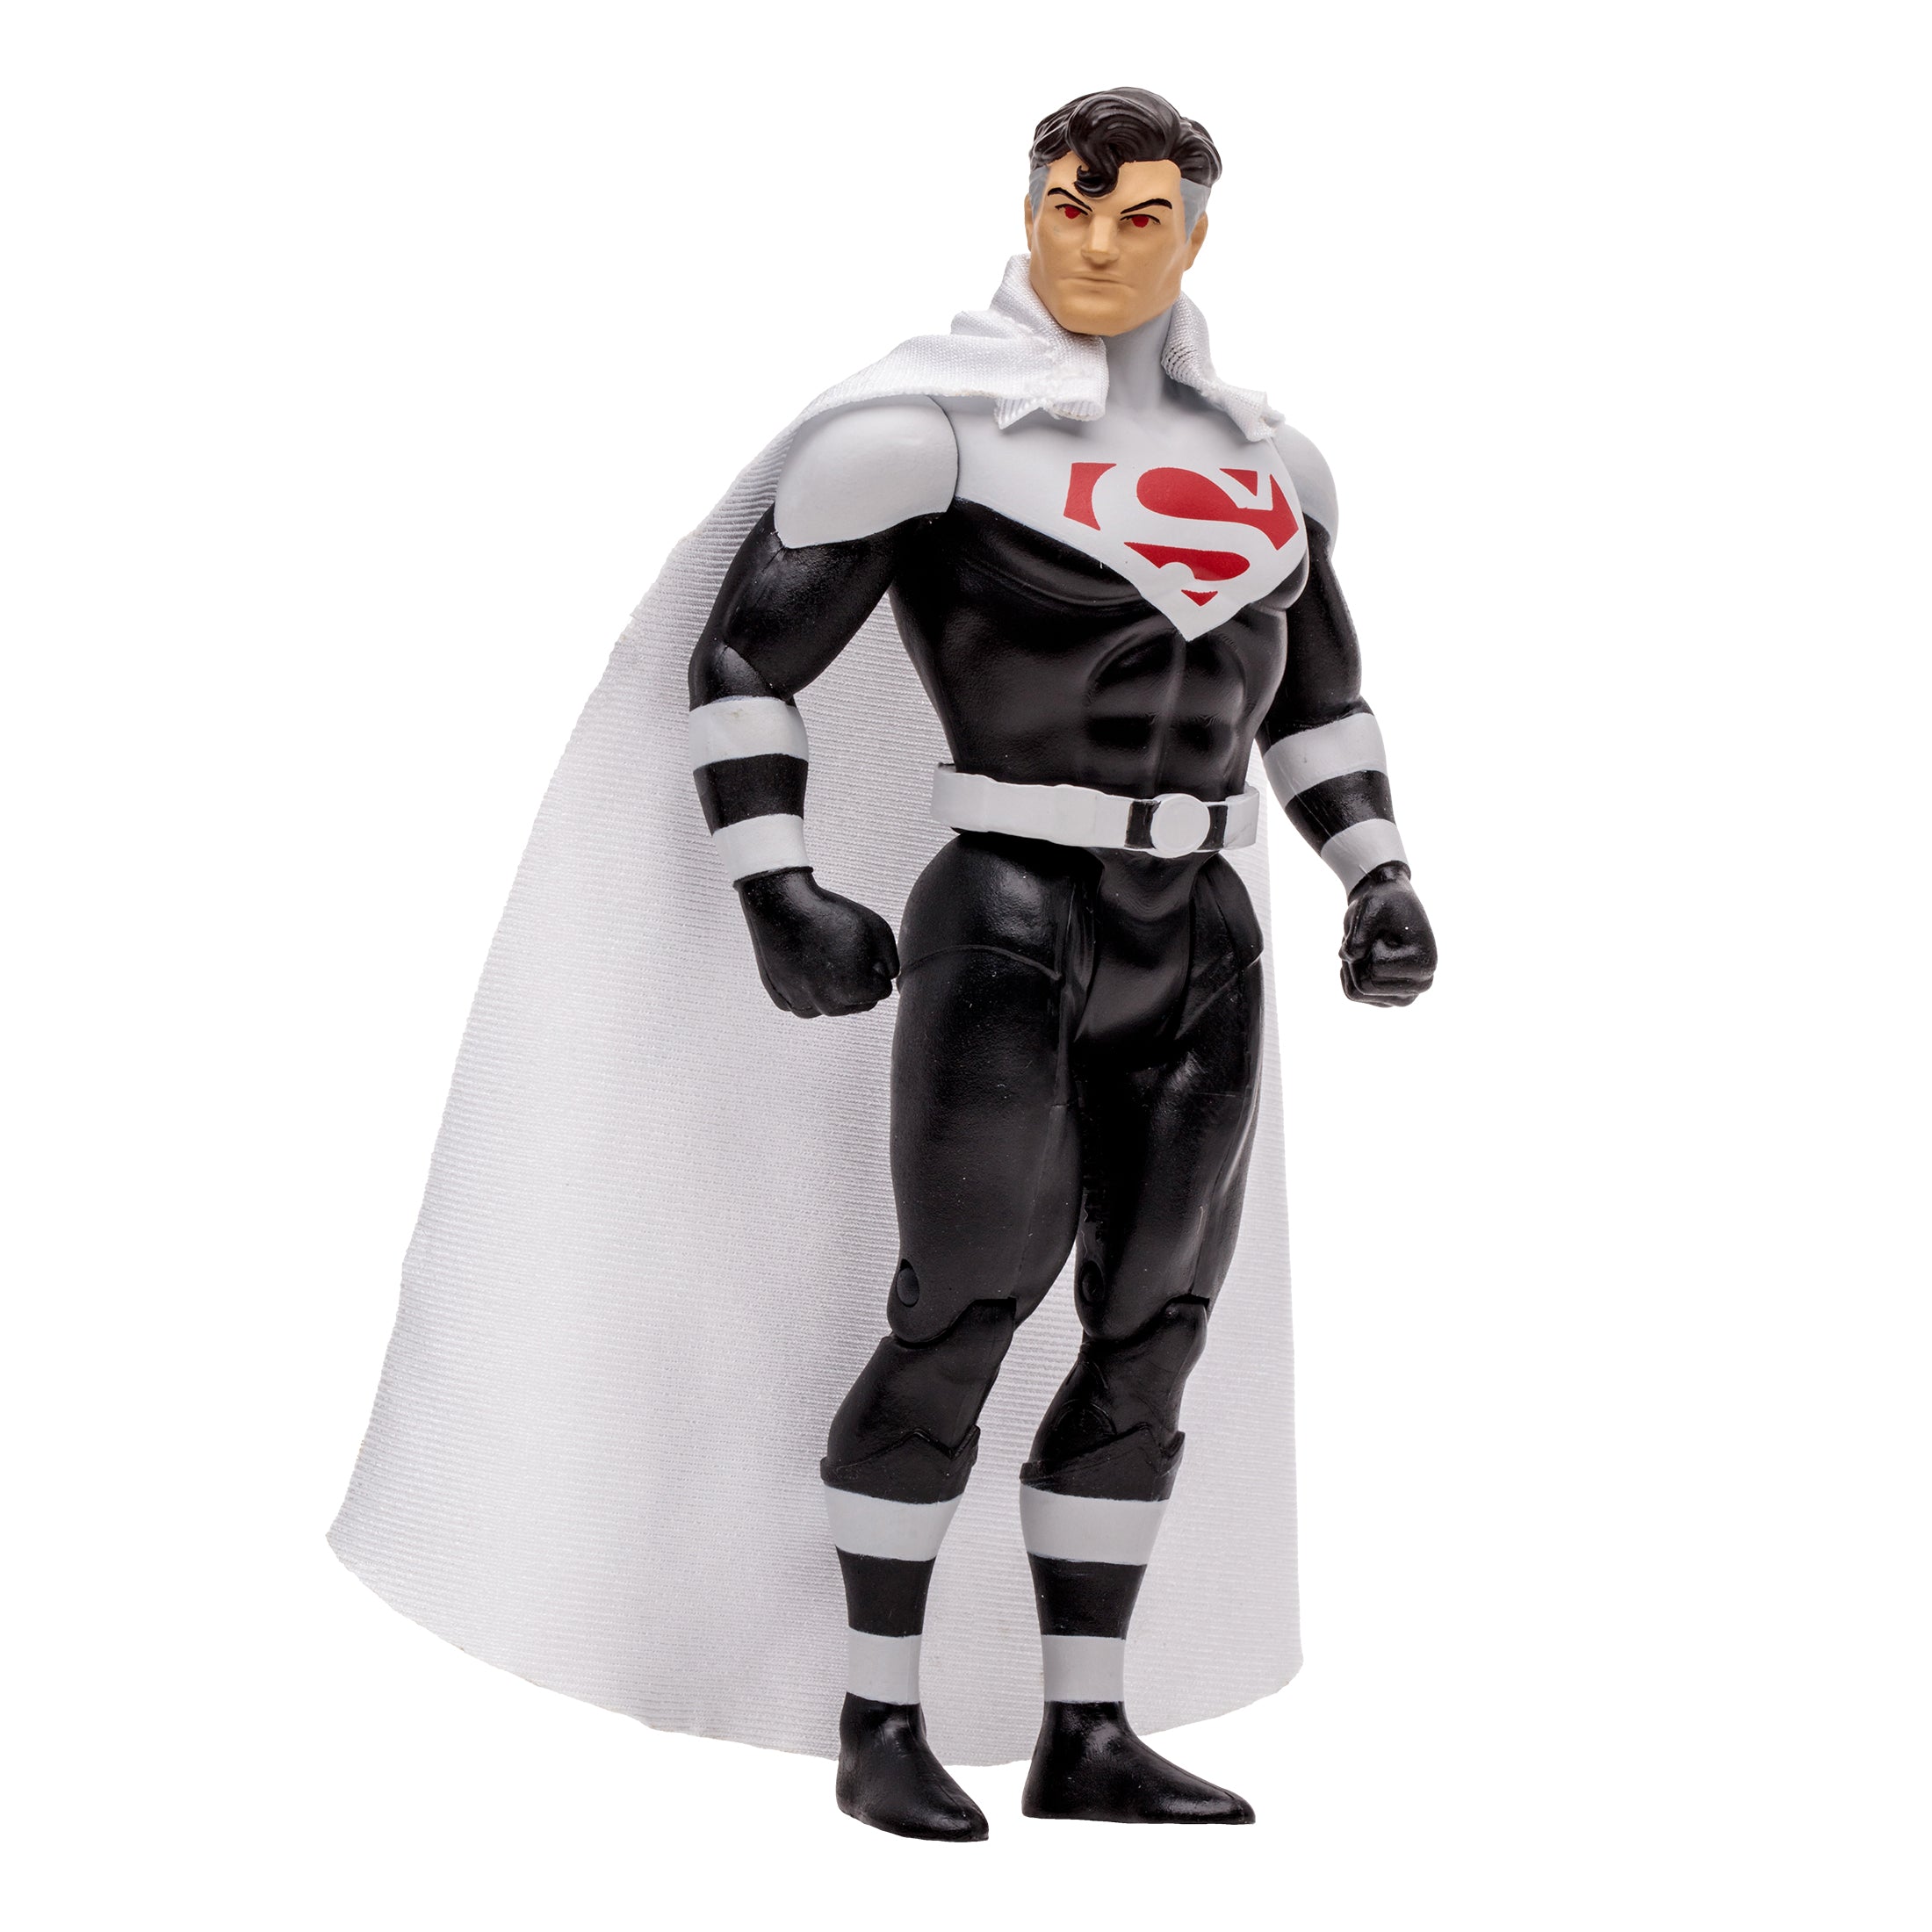 DC Direct Super Powers Figura de Accion: DC Comics Superman - Lord Superman 4.5 Pulgadas